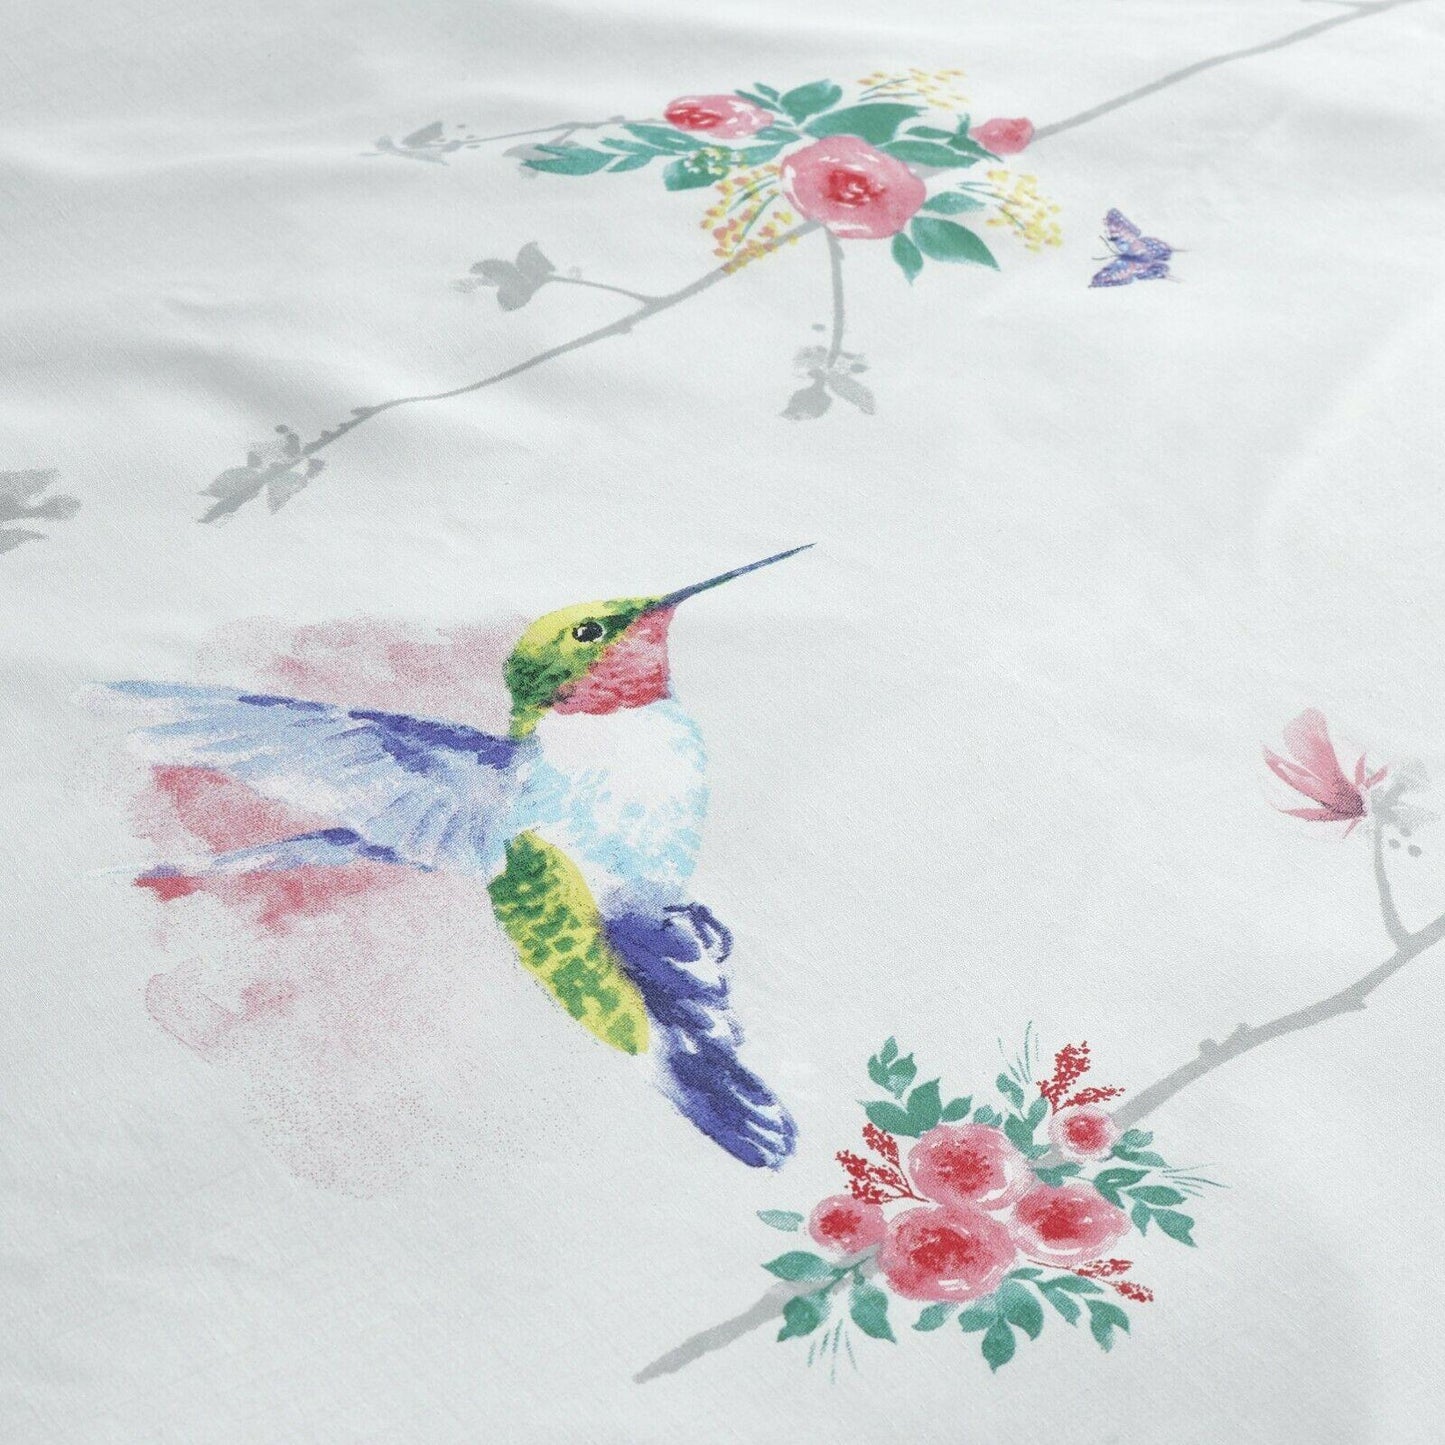 Hummingbird Floral Print Duvet Cover Polycotton Bedding Set - Pink